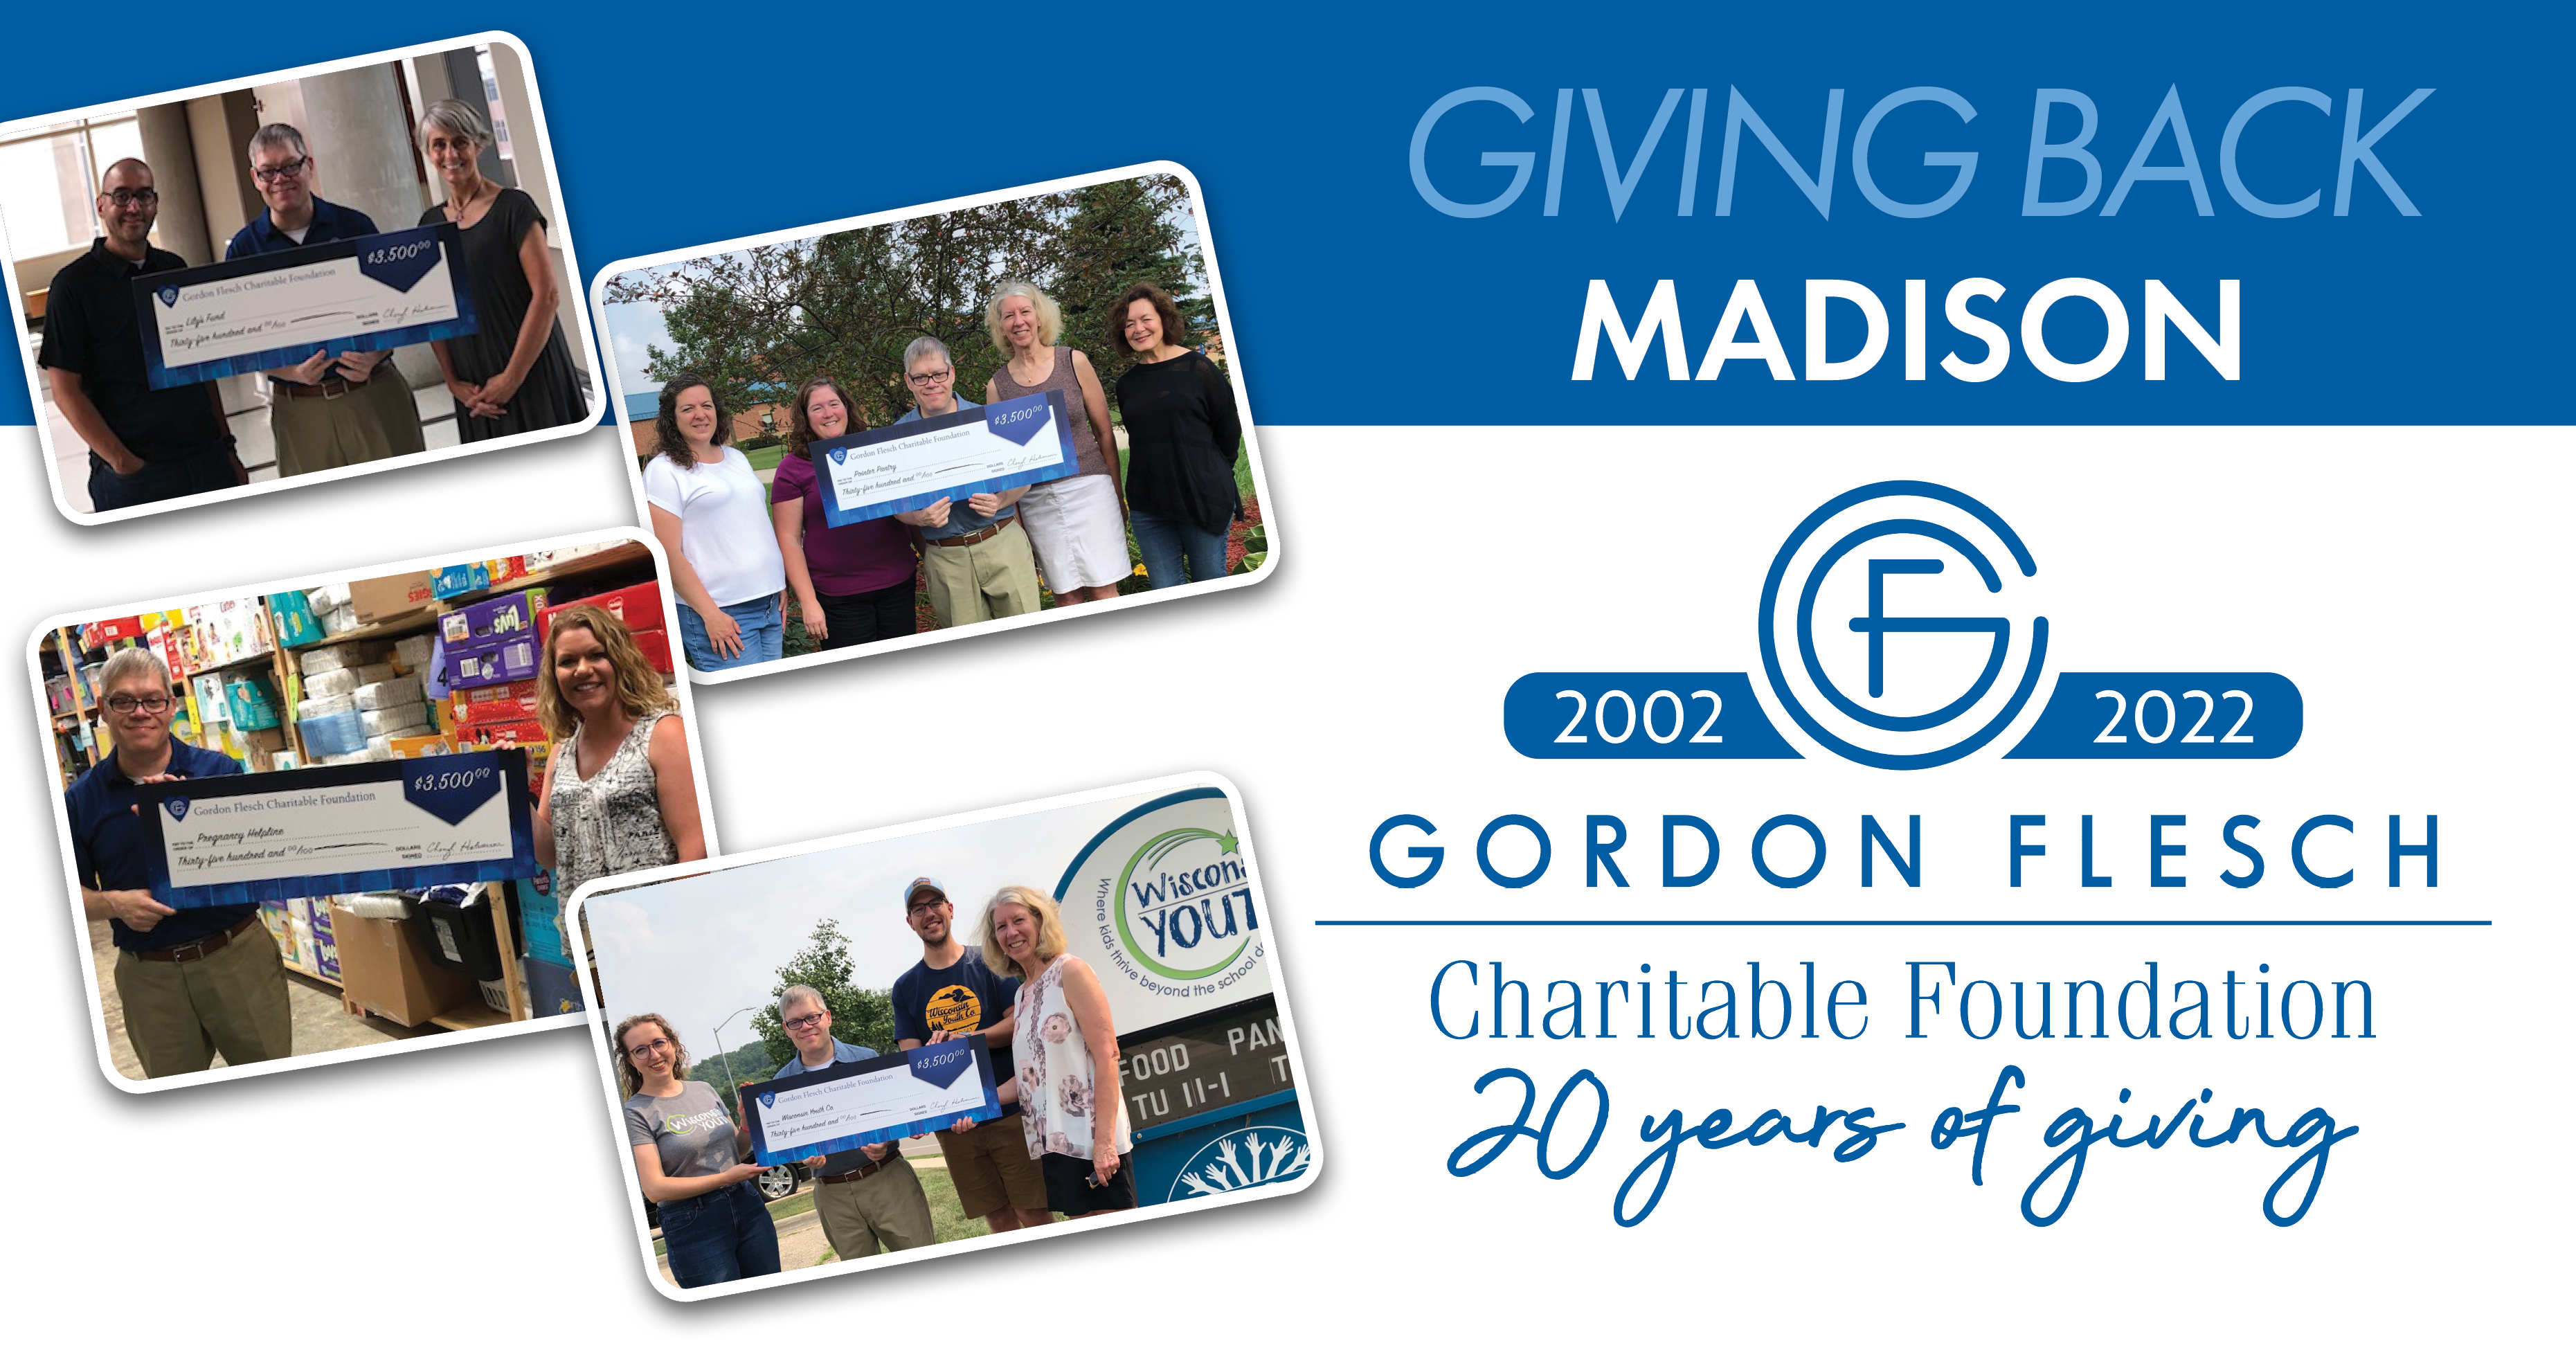 Gordon Flesch Charitable Foundation Donates $14,000 to Madison Charities